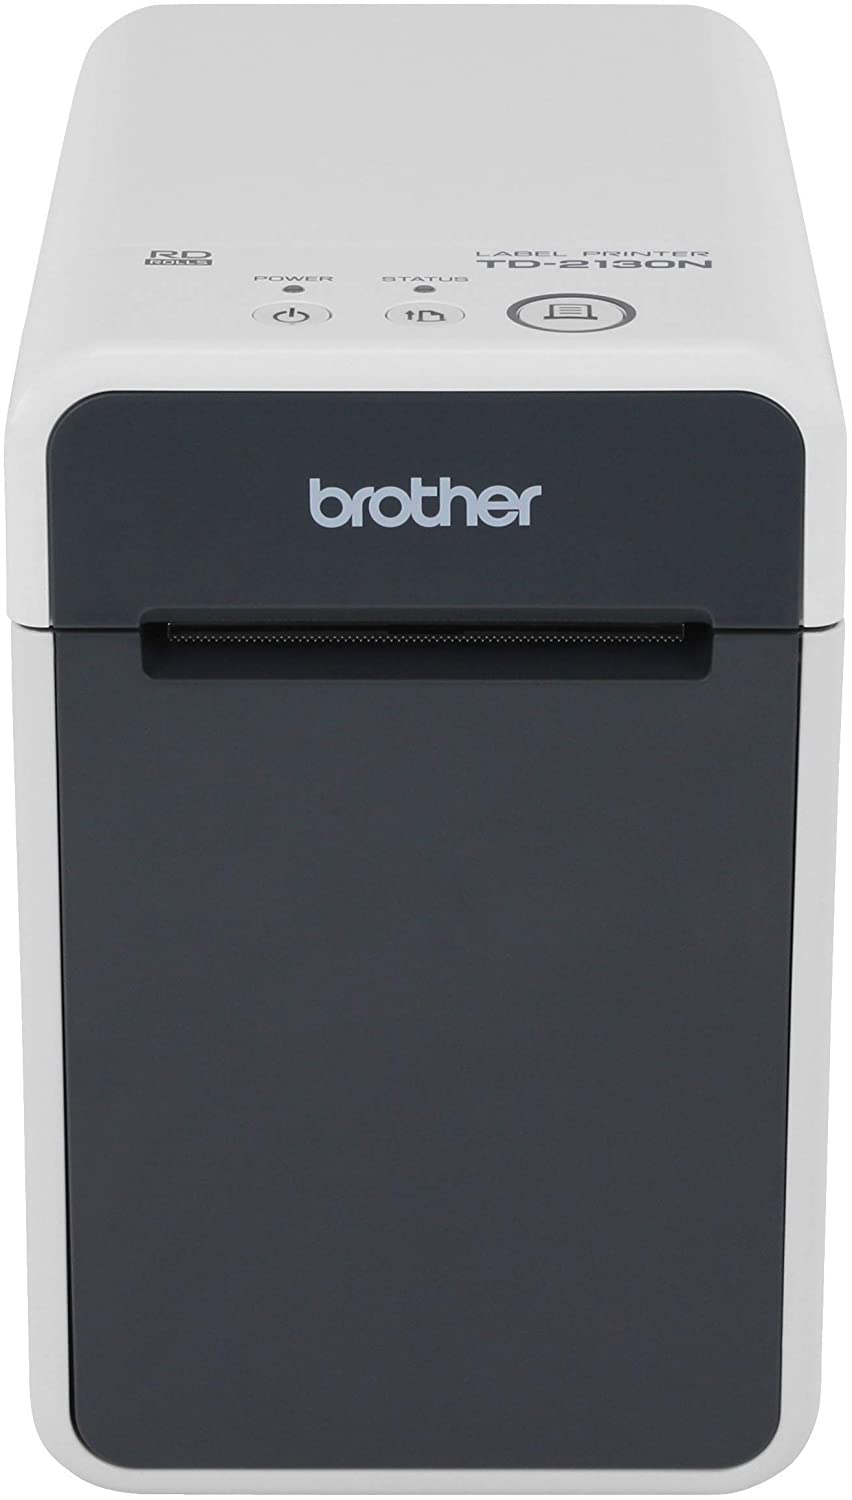 Brother TD2130N Imprimante d'étiquettes